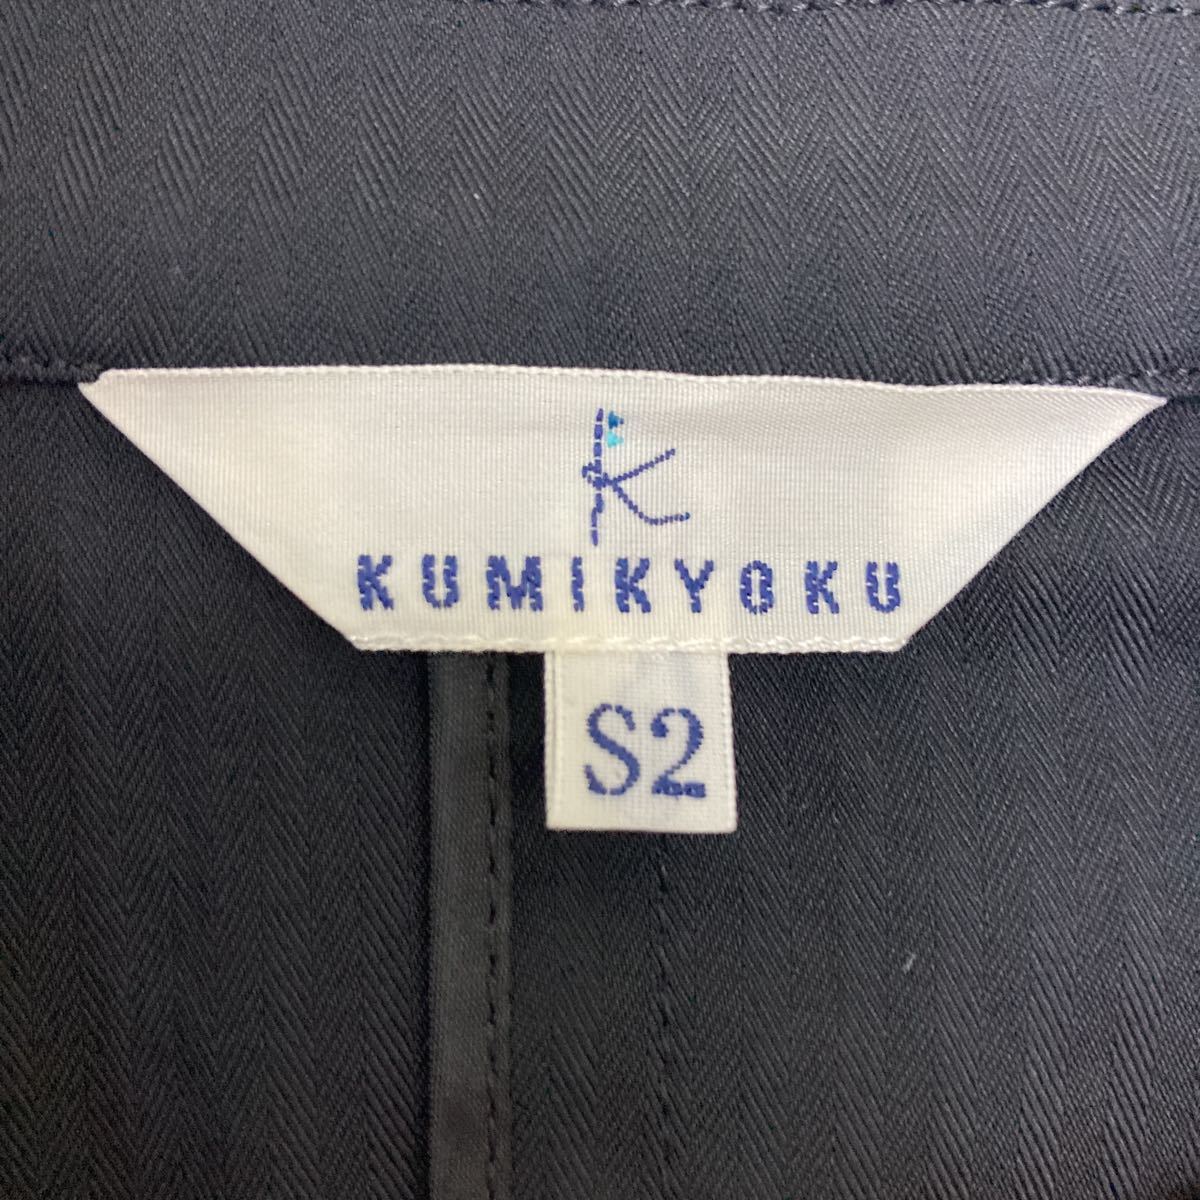 164 Kumikyoku KUMIKYOKU stretch tailored jacket 1B stripe spring summer office business school event black black formal 30305M